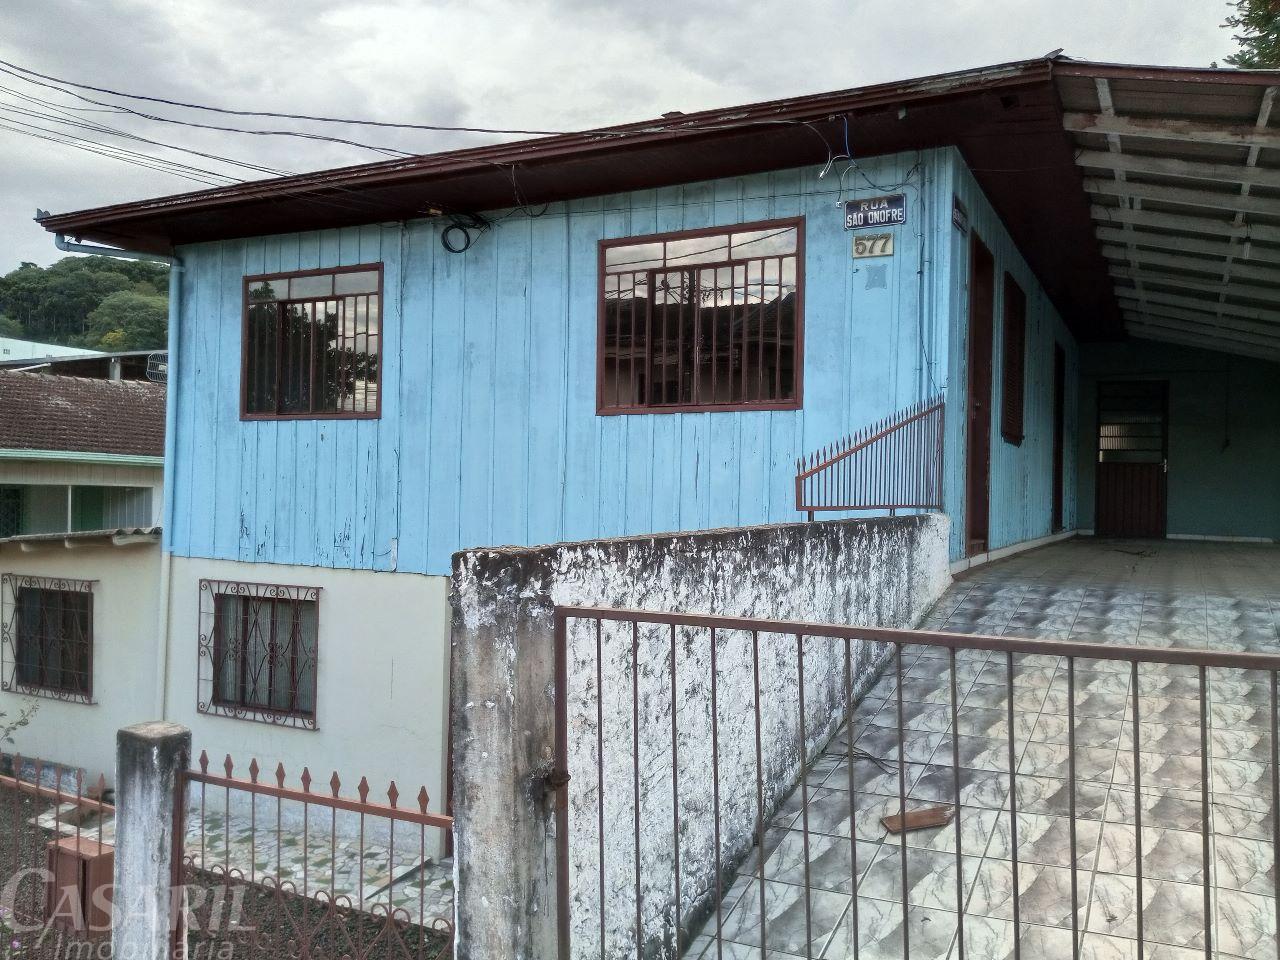 Investimento  Terreno Comercial À Venda Na Cango, Francisco Beltrao - Pr